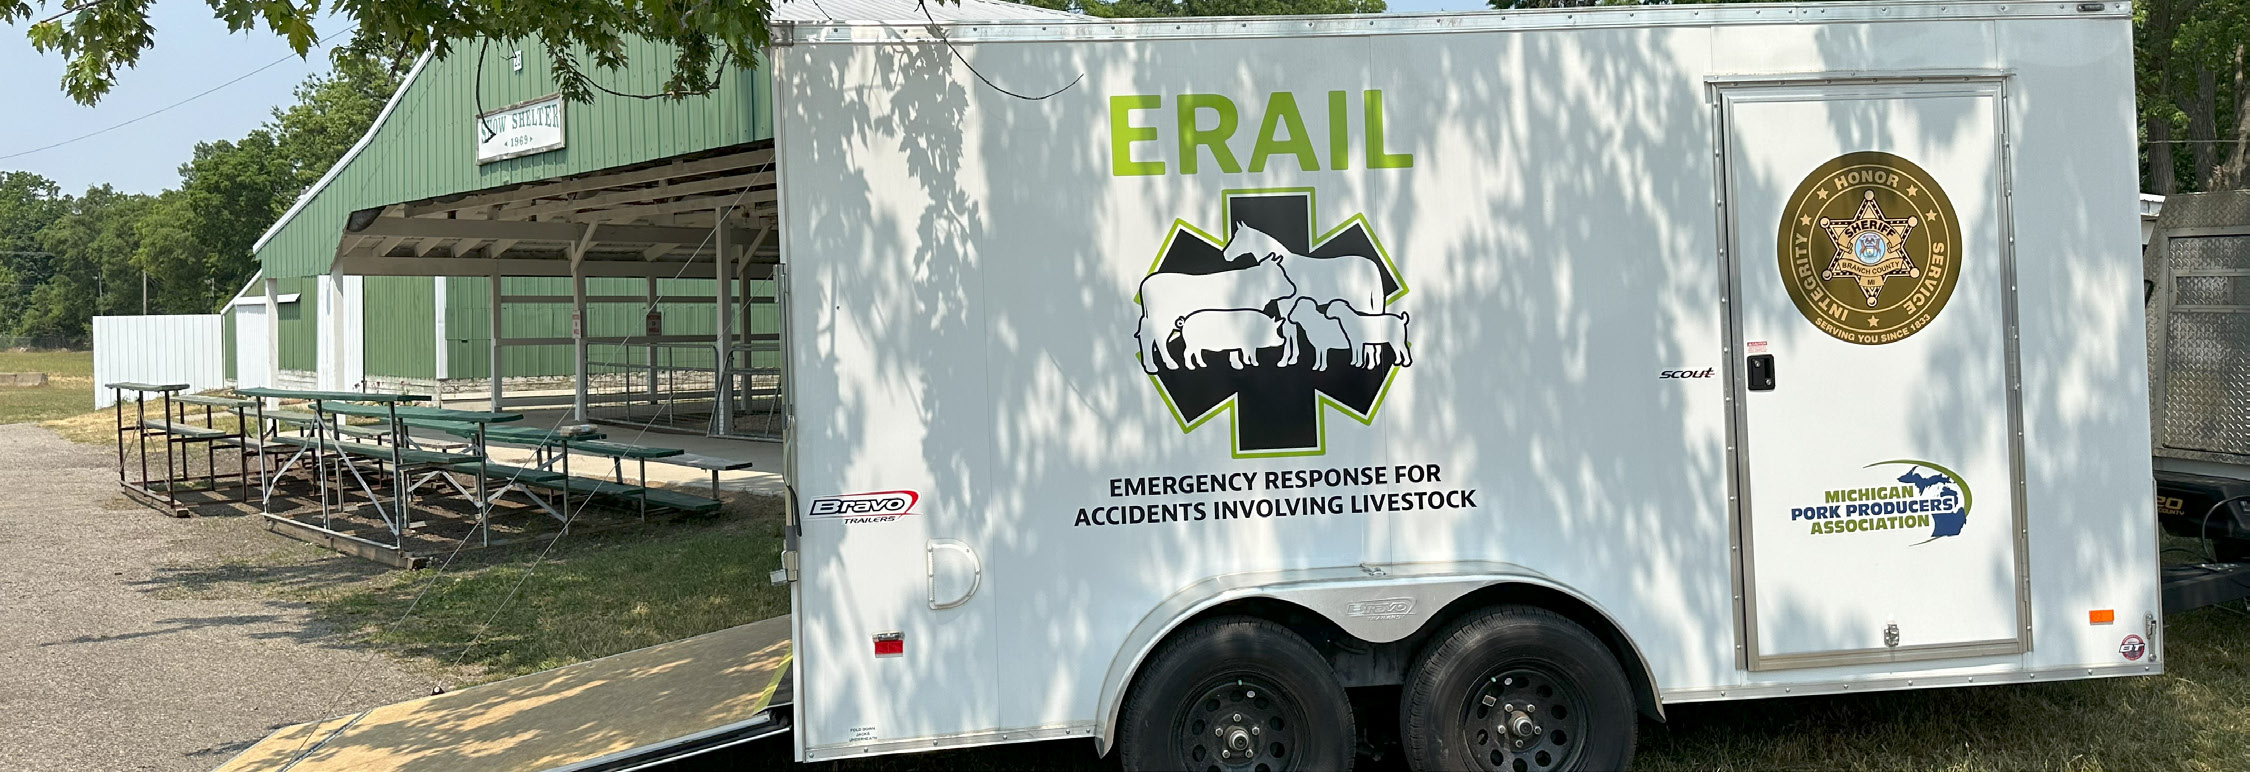 23_Extension Impact Report_ERAIL-accident_trailer.jpg